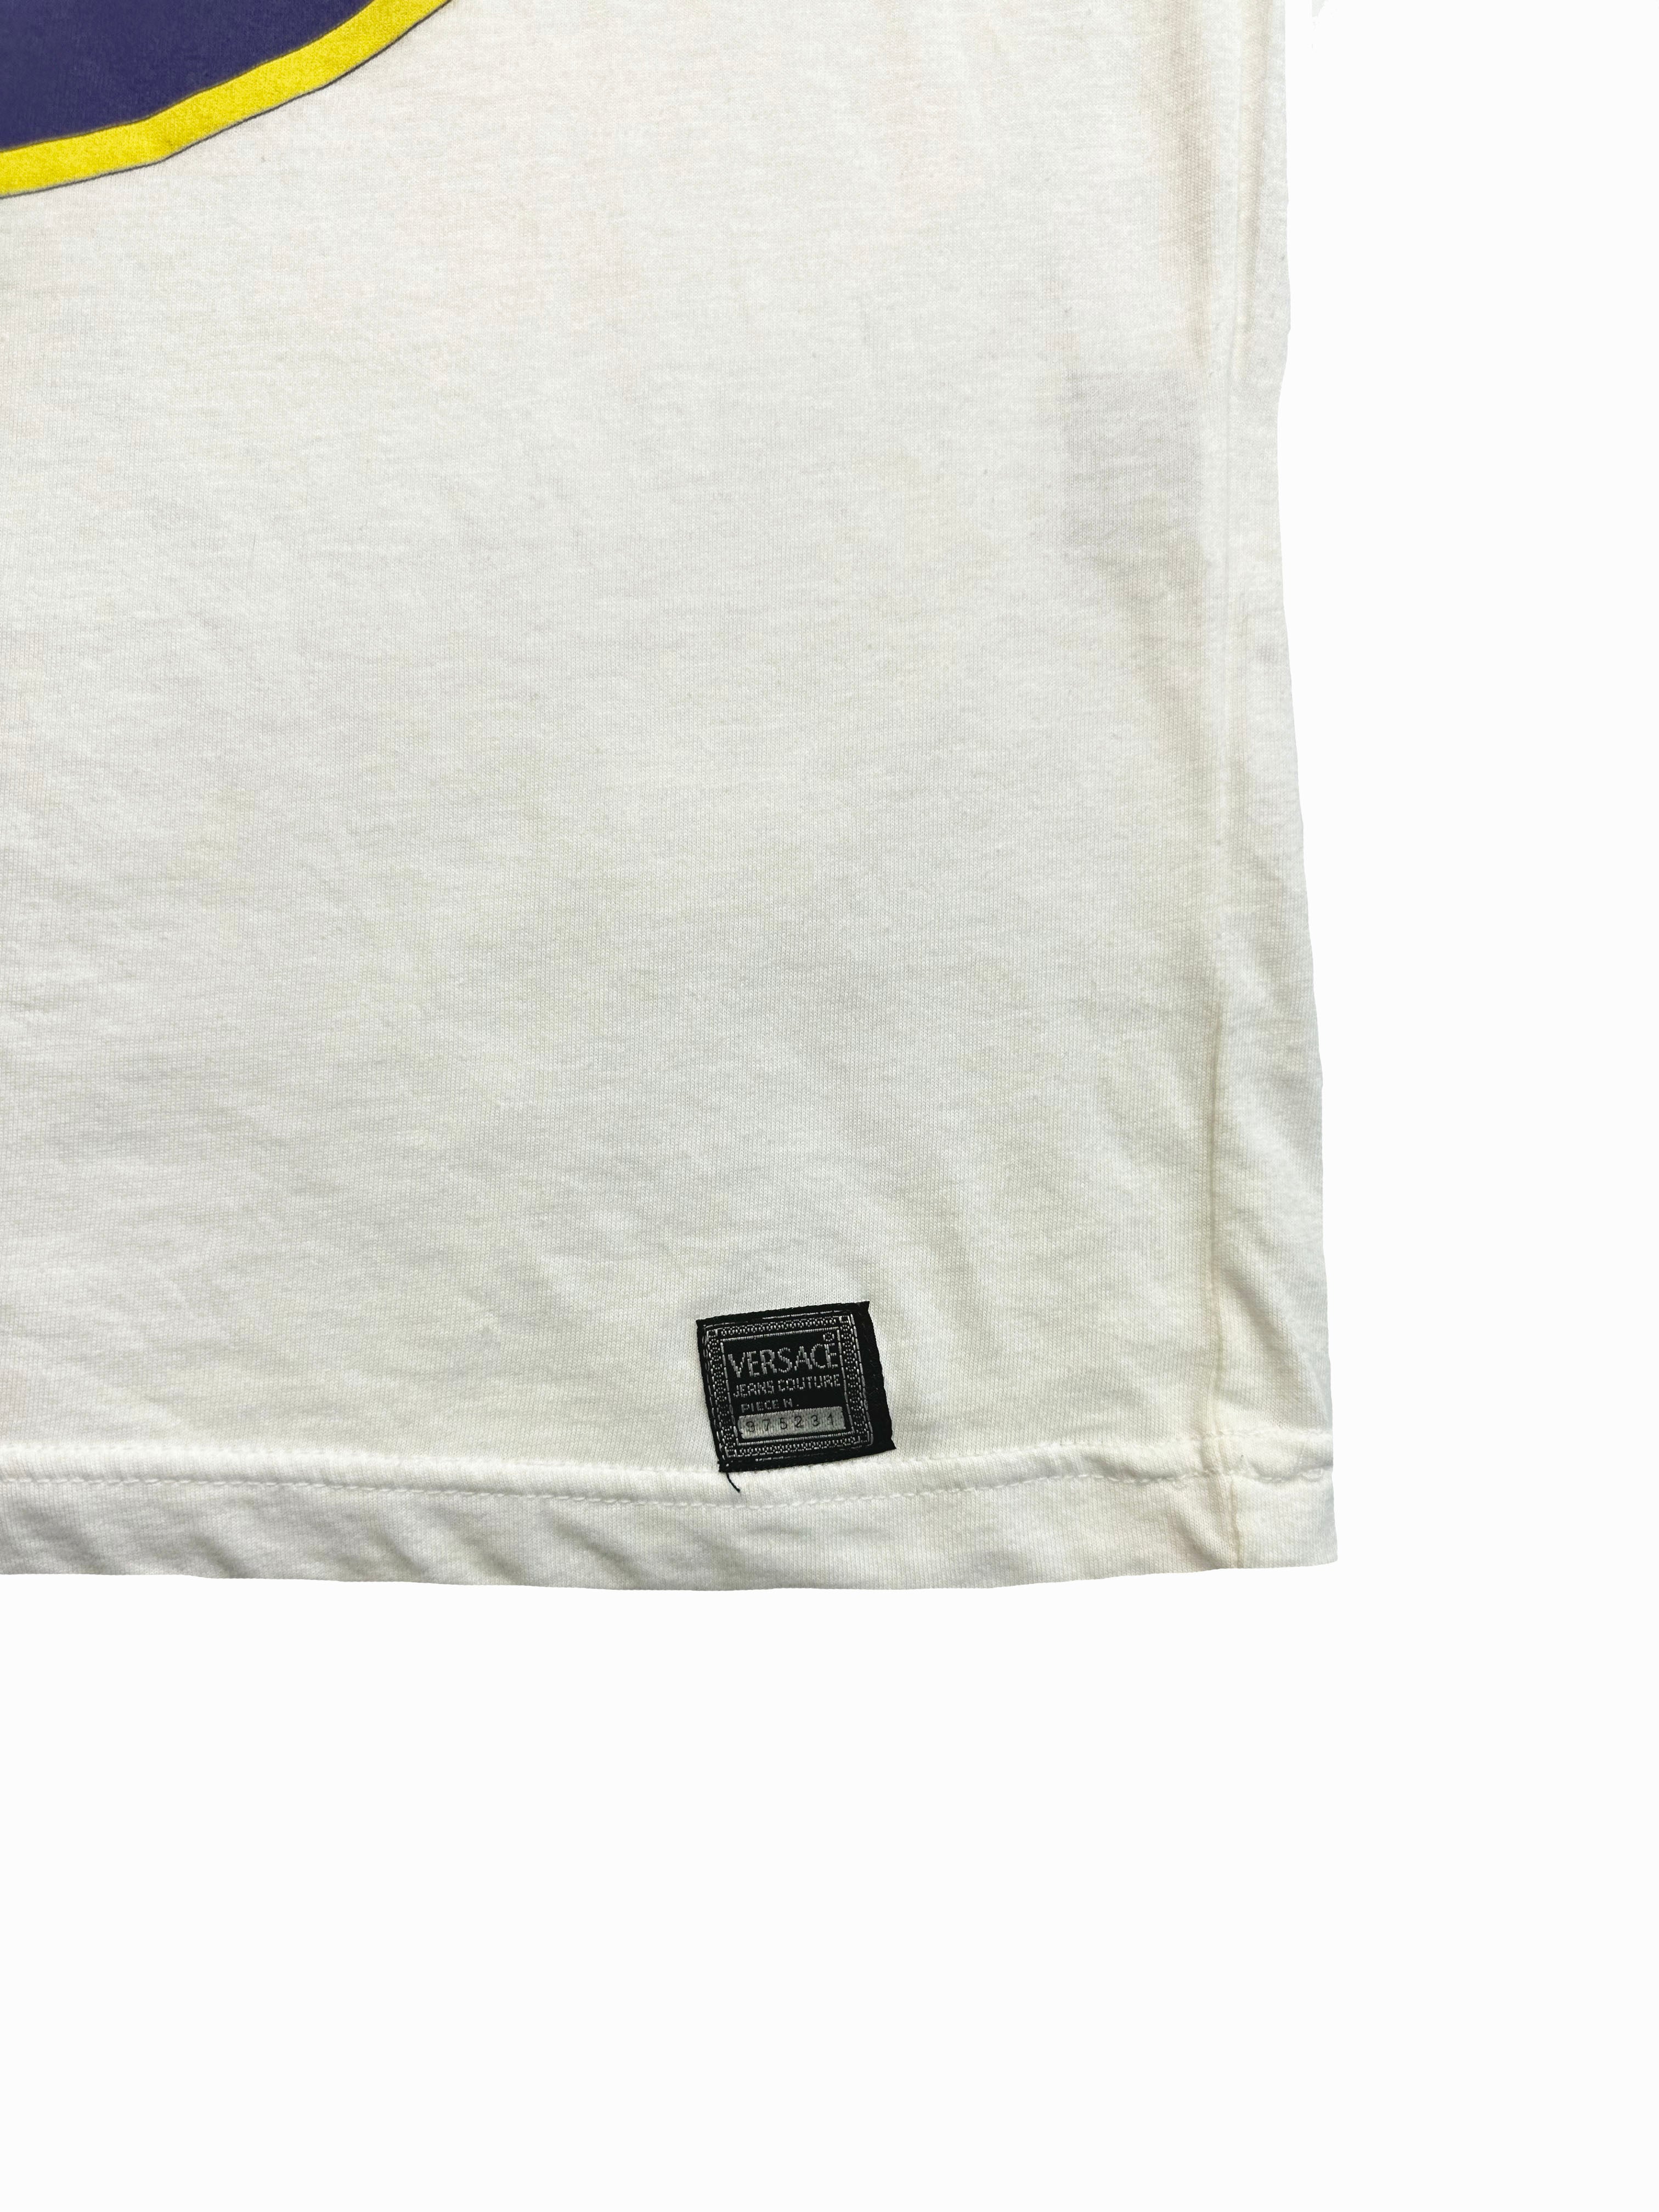 Versace White Medusa Spell Out T-shirt BNWT 1995